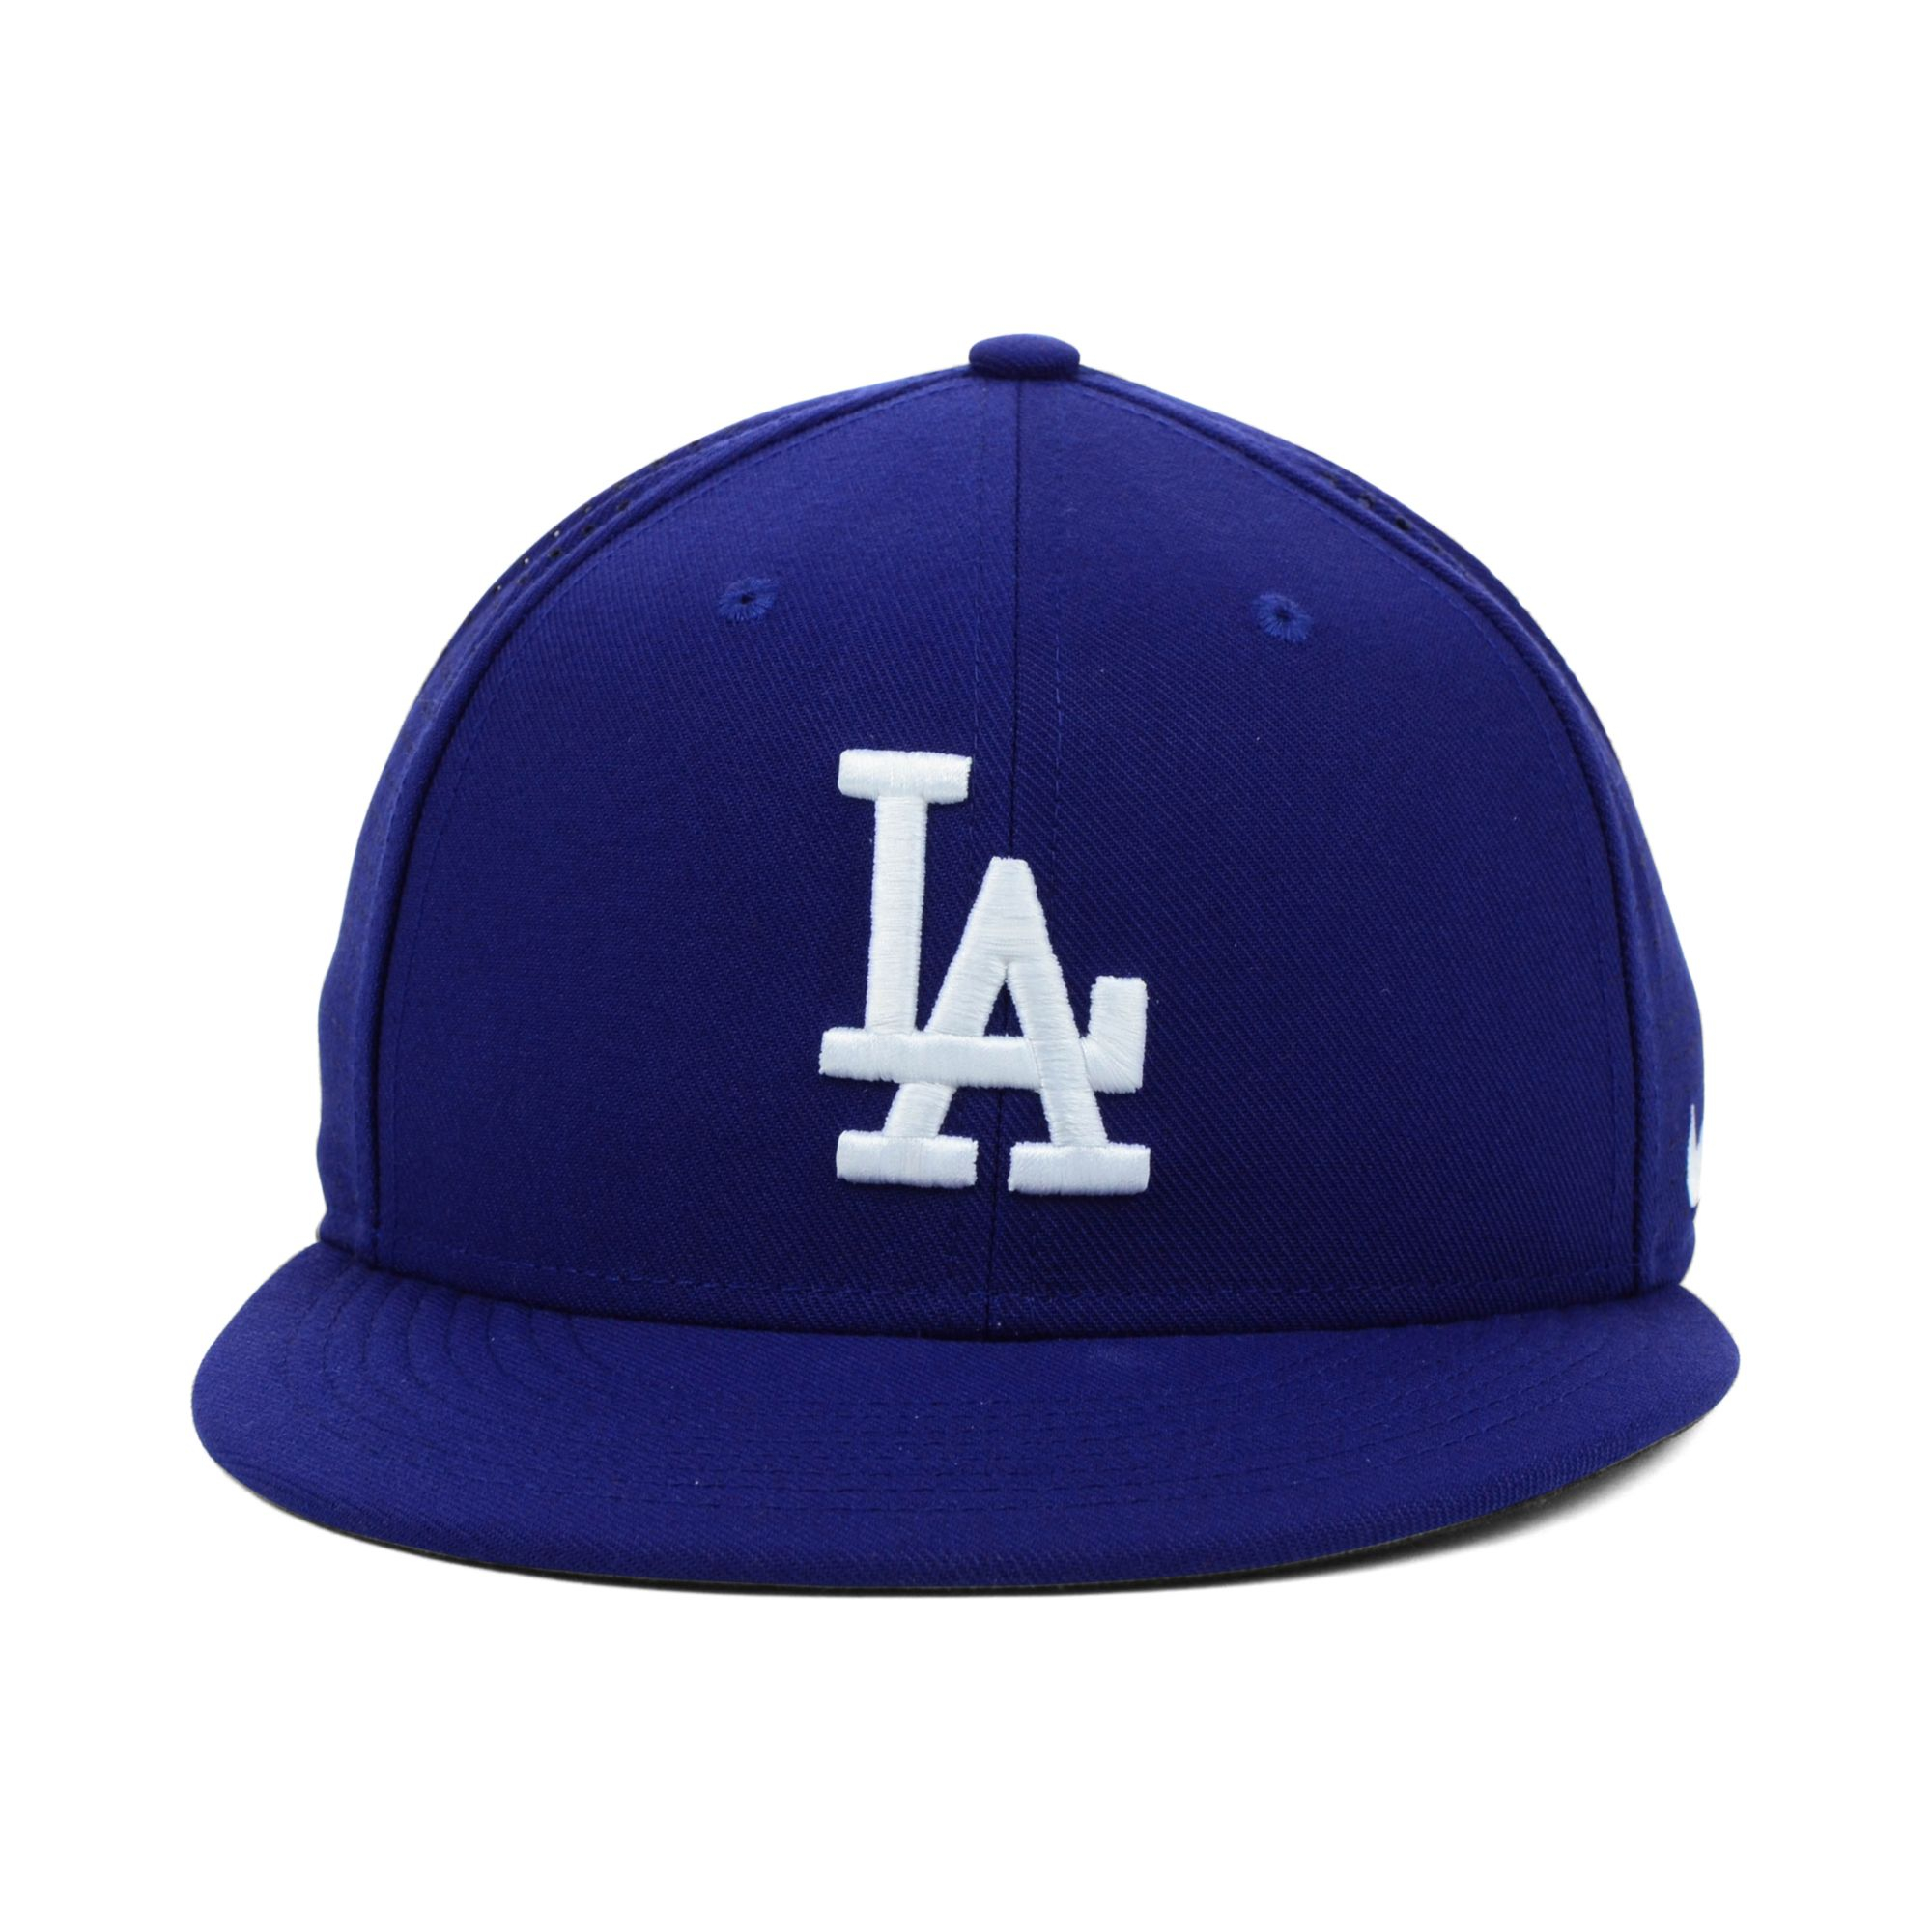 Lyst - Nike Los Angeles Dodgers Drifit Vapor Adjustable Cap in Blue for Men